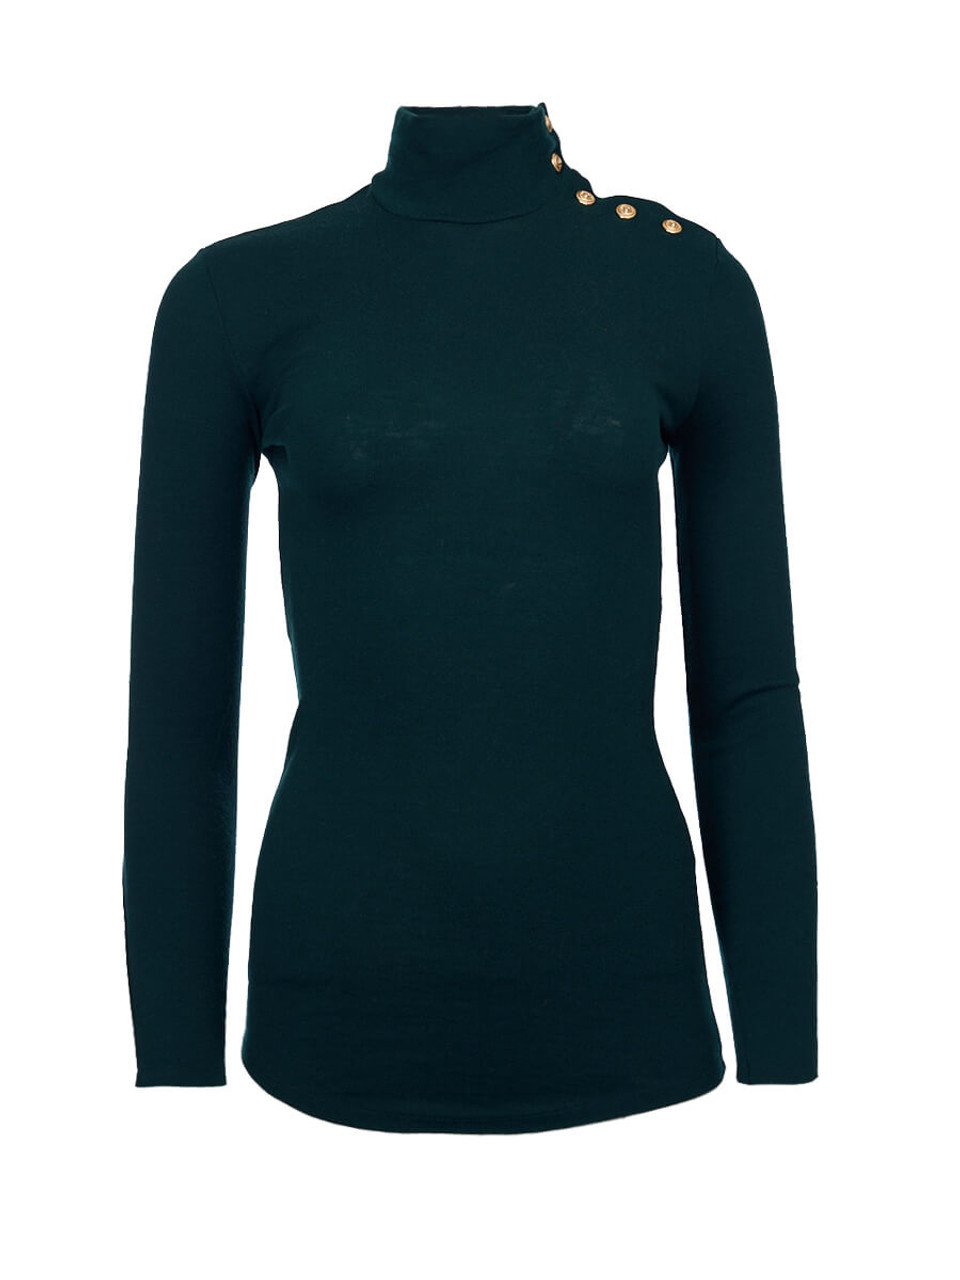 Women Balmain Green Wool Turtle Neck Sweater - Size S UK8 US4 FR36